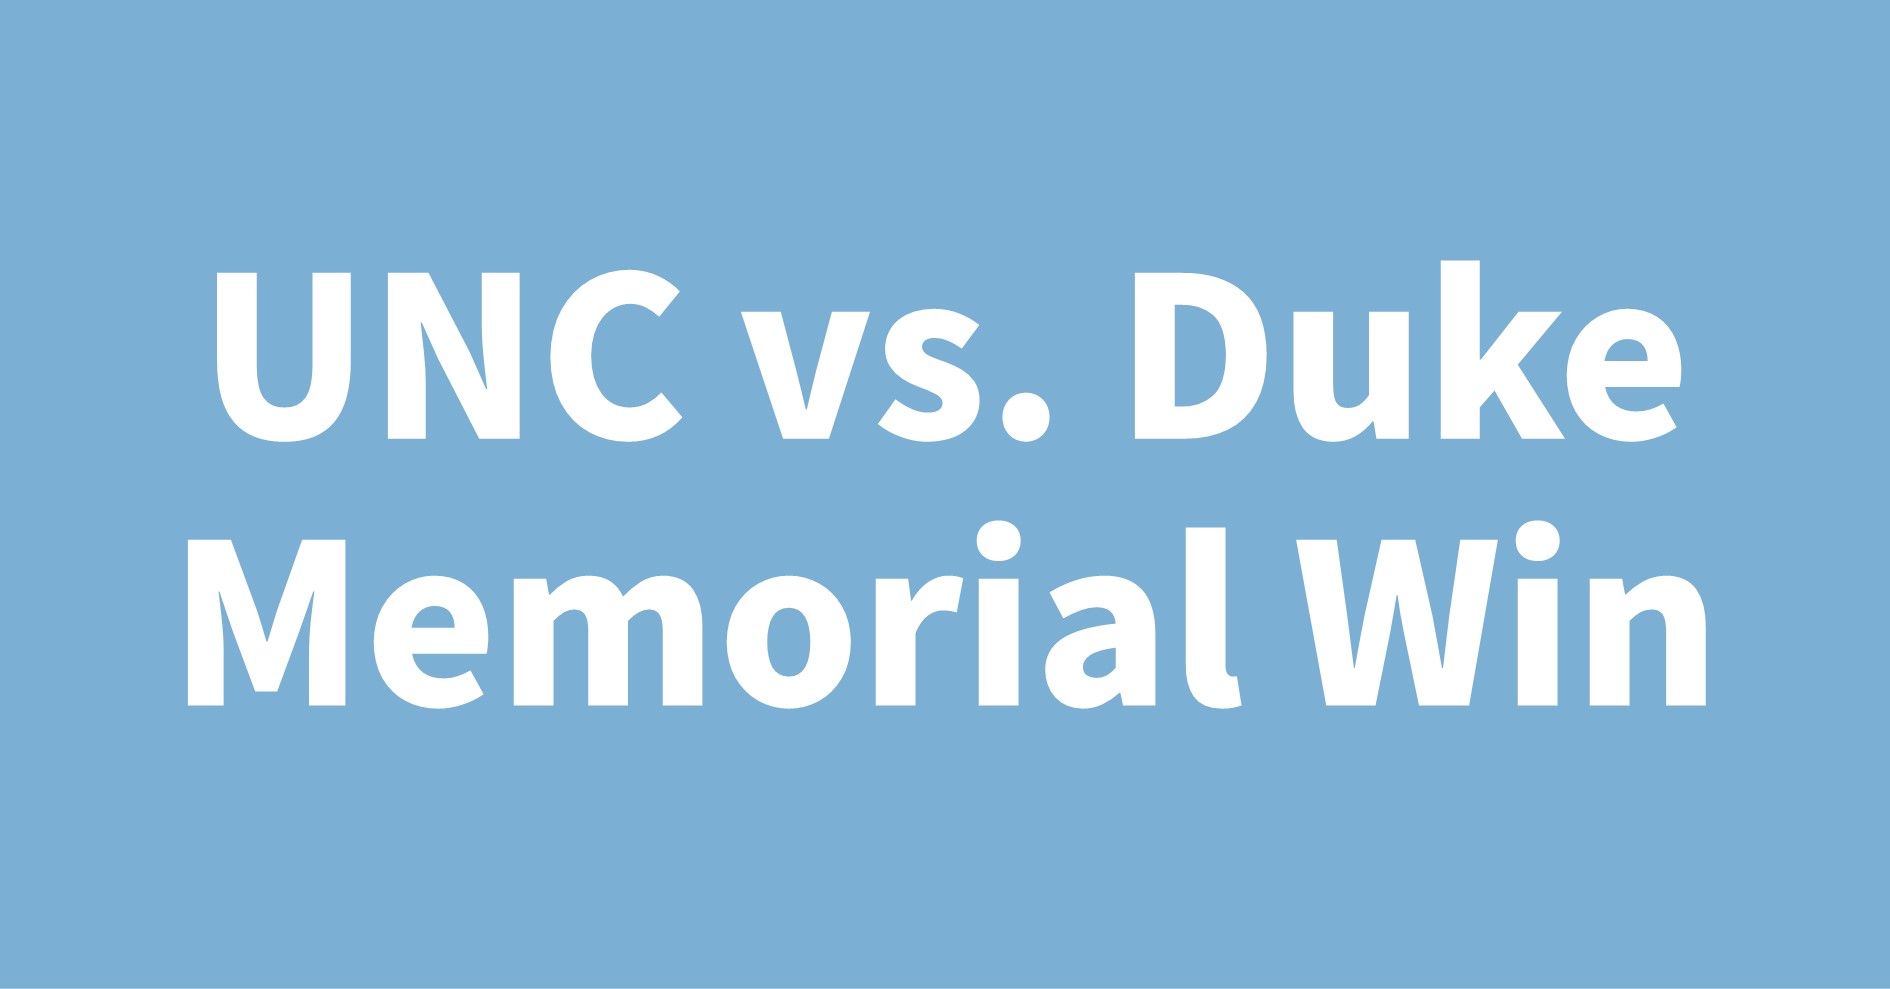 UNC vs. Duke Memorial Win